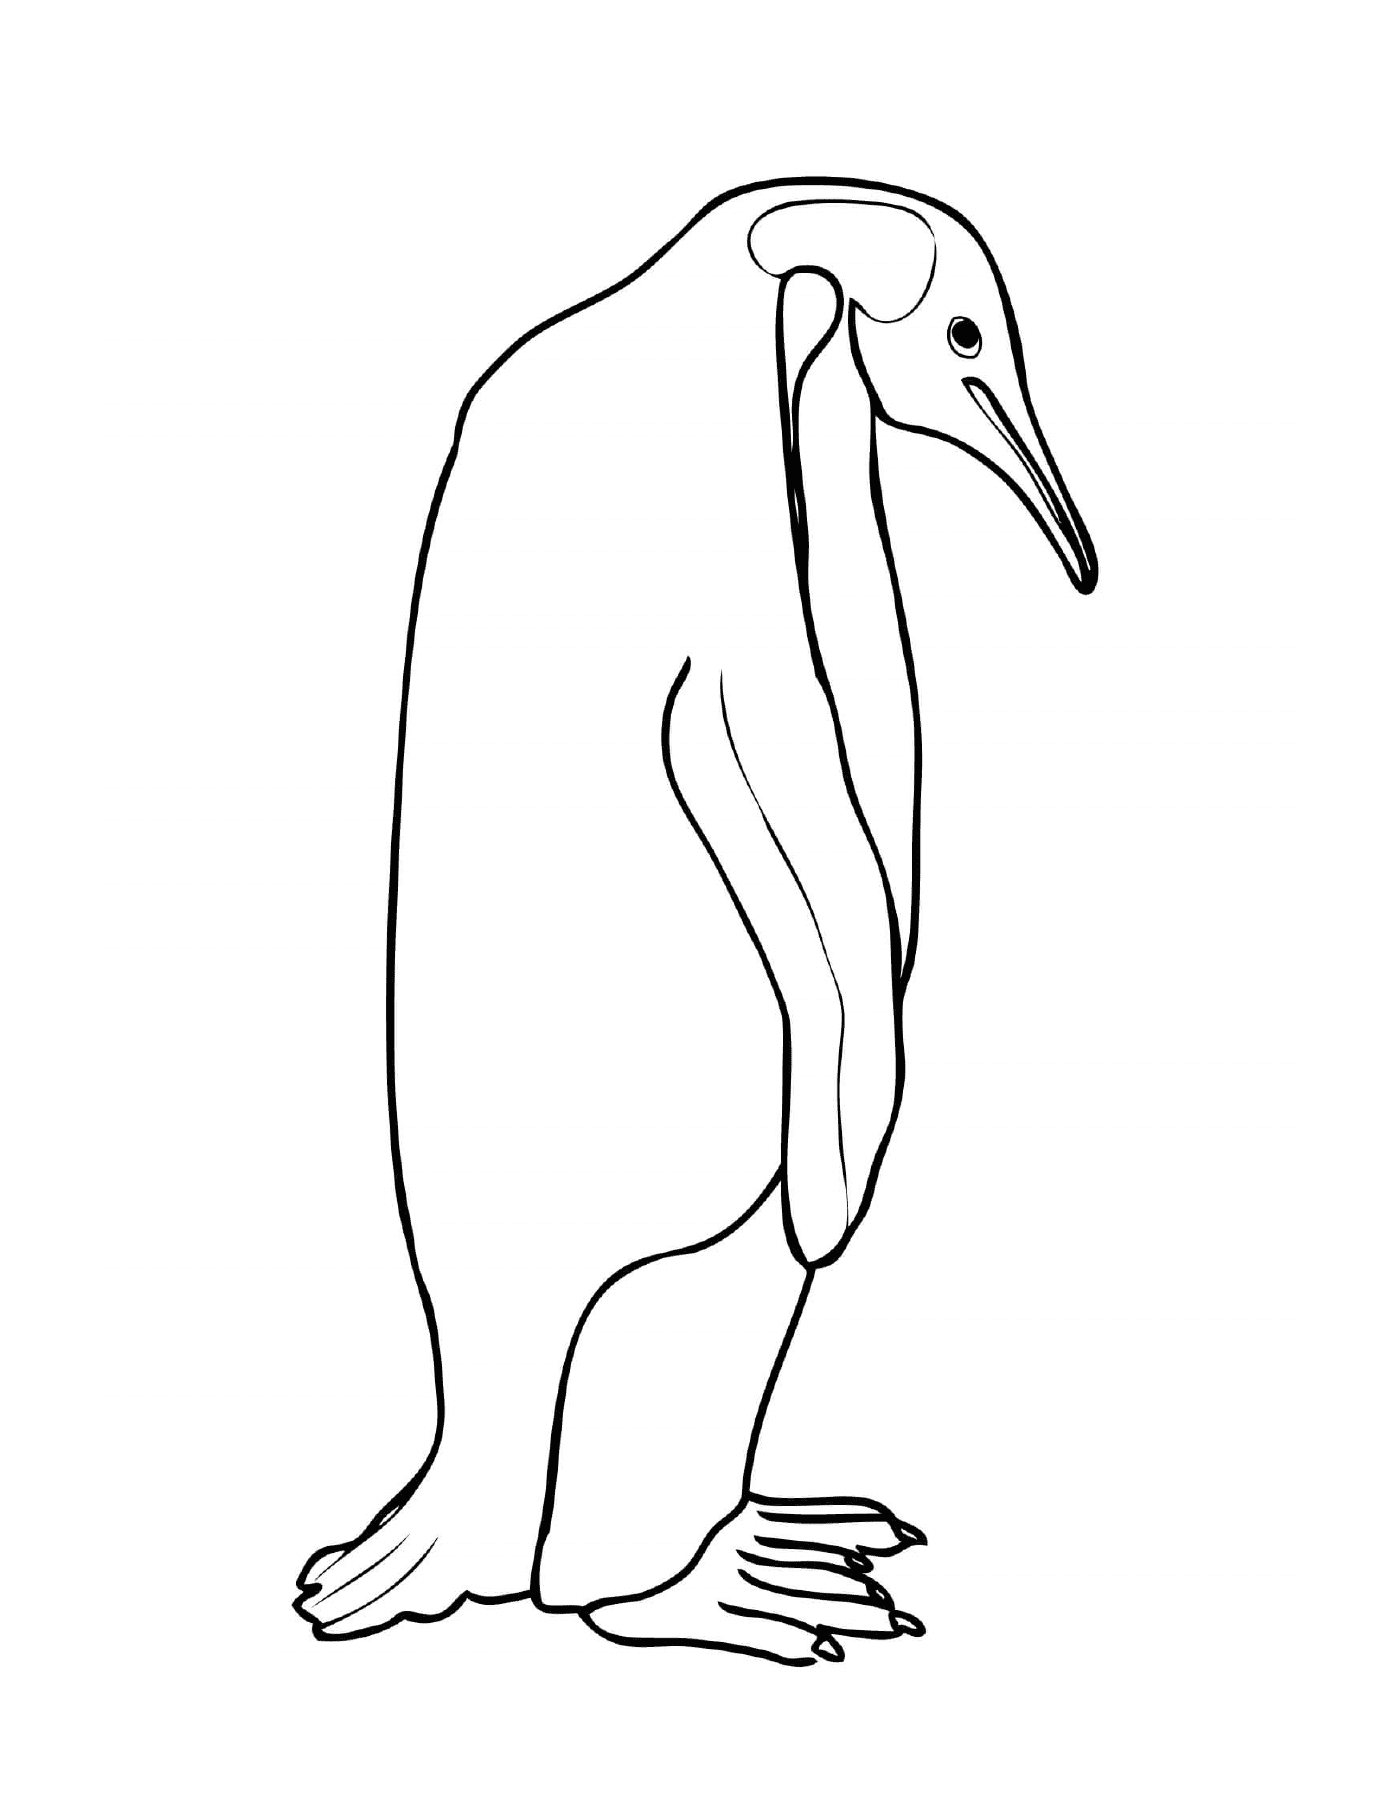  Penguin manchot with a long beak 